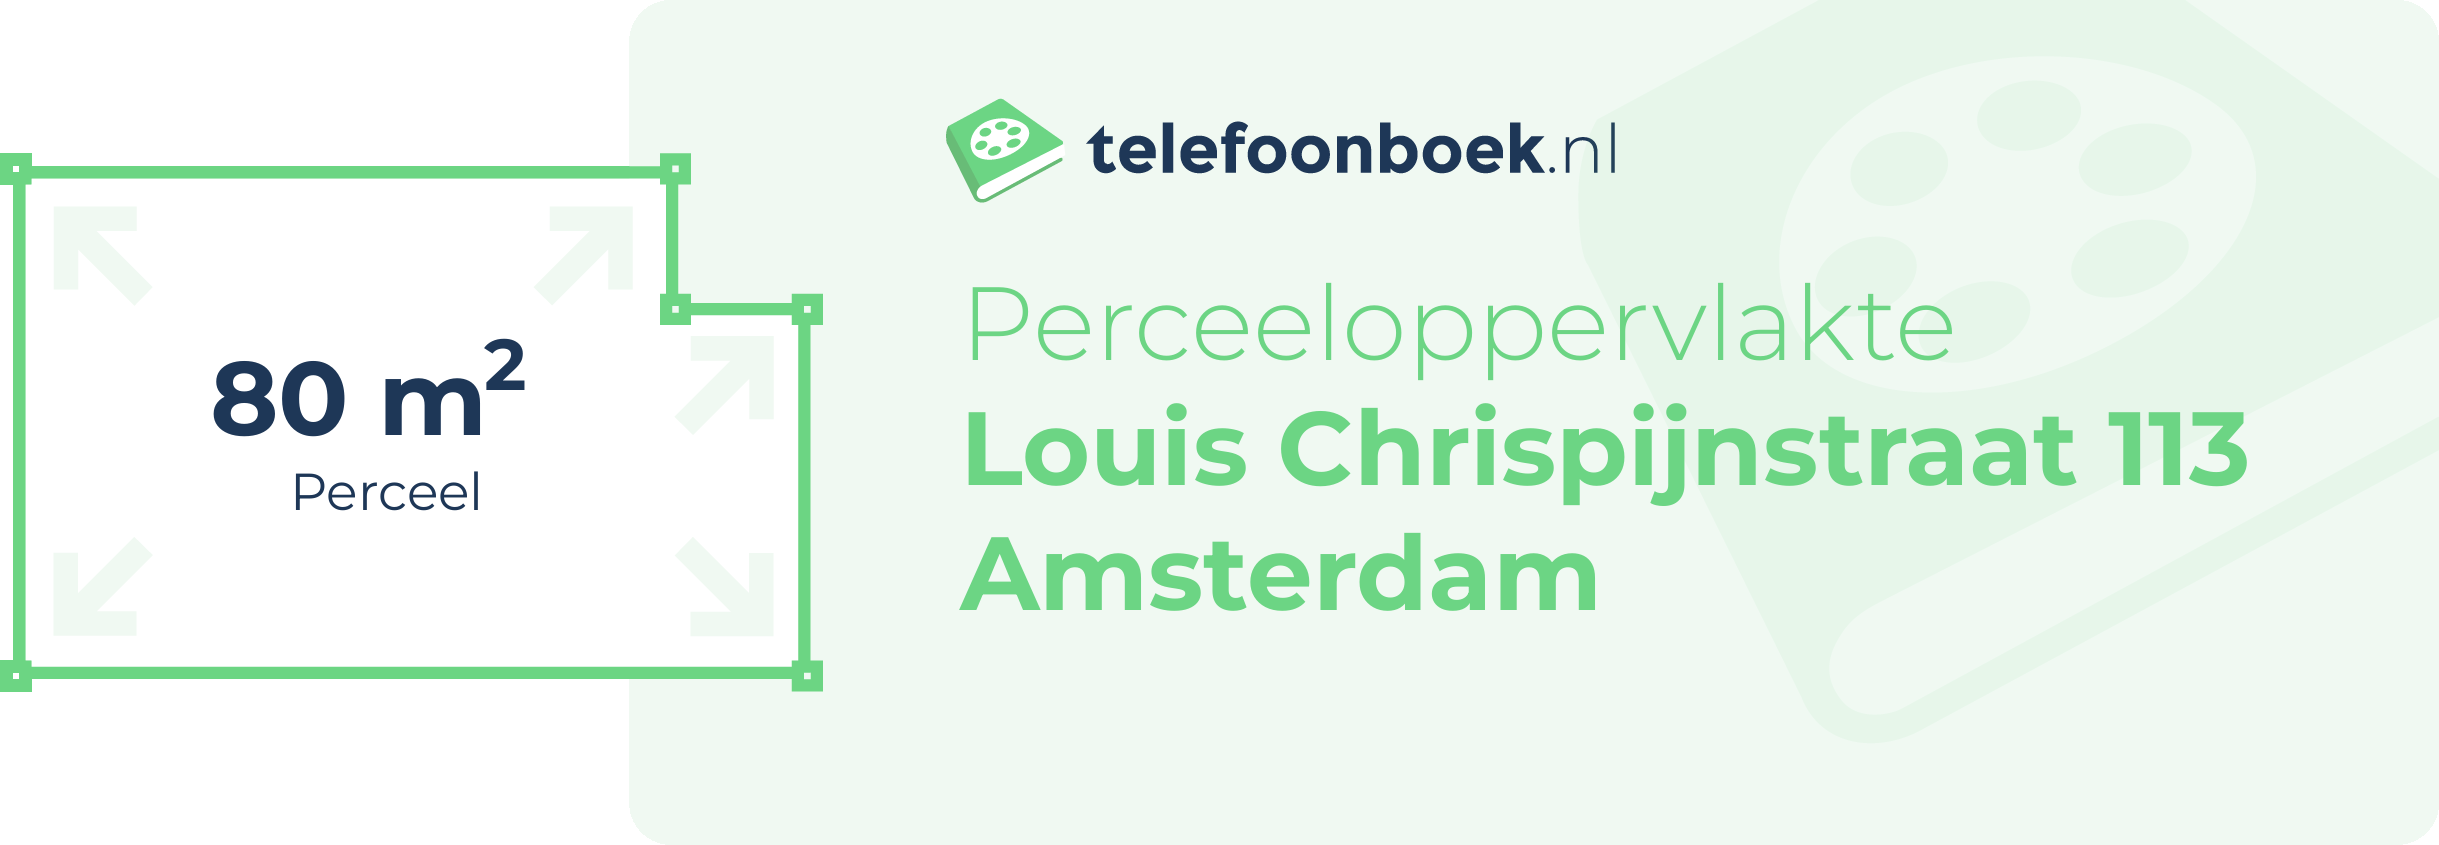 Perceeloppervlakte Louis Chrispijnstraat 113 Amsterdam